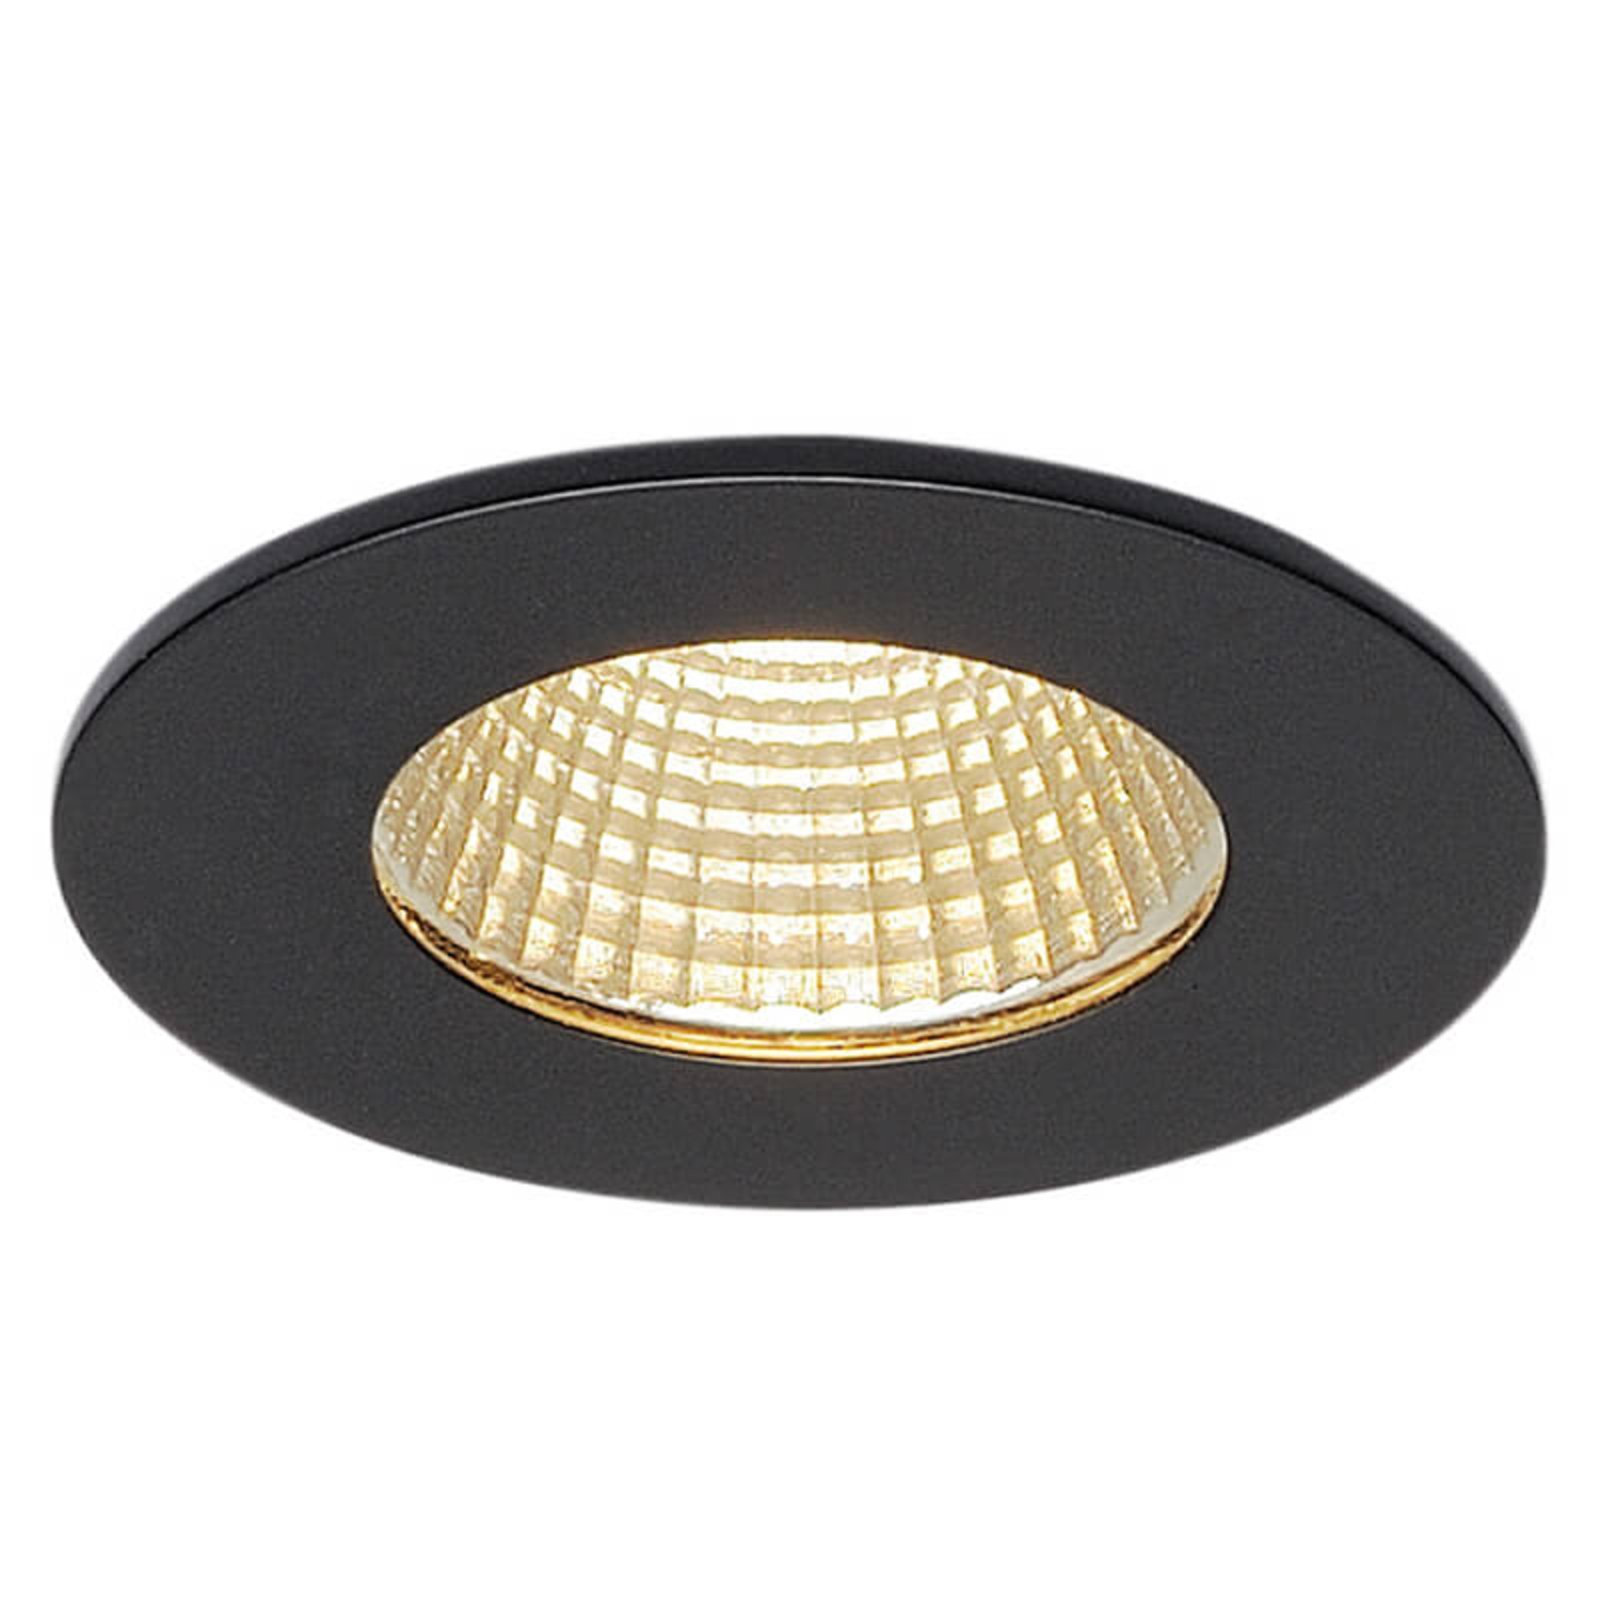 SLV Patta-I lampe encastrable LED ronde, noir mat